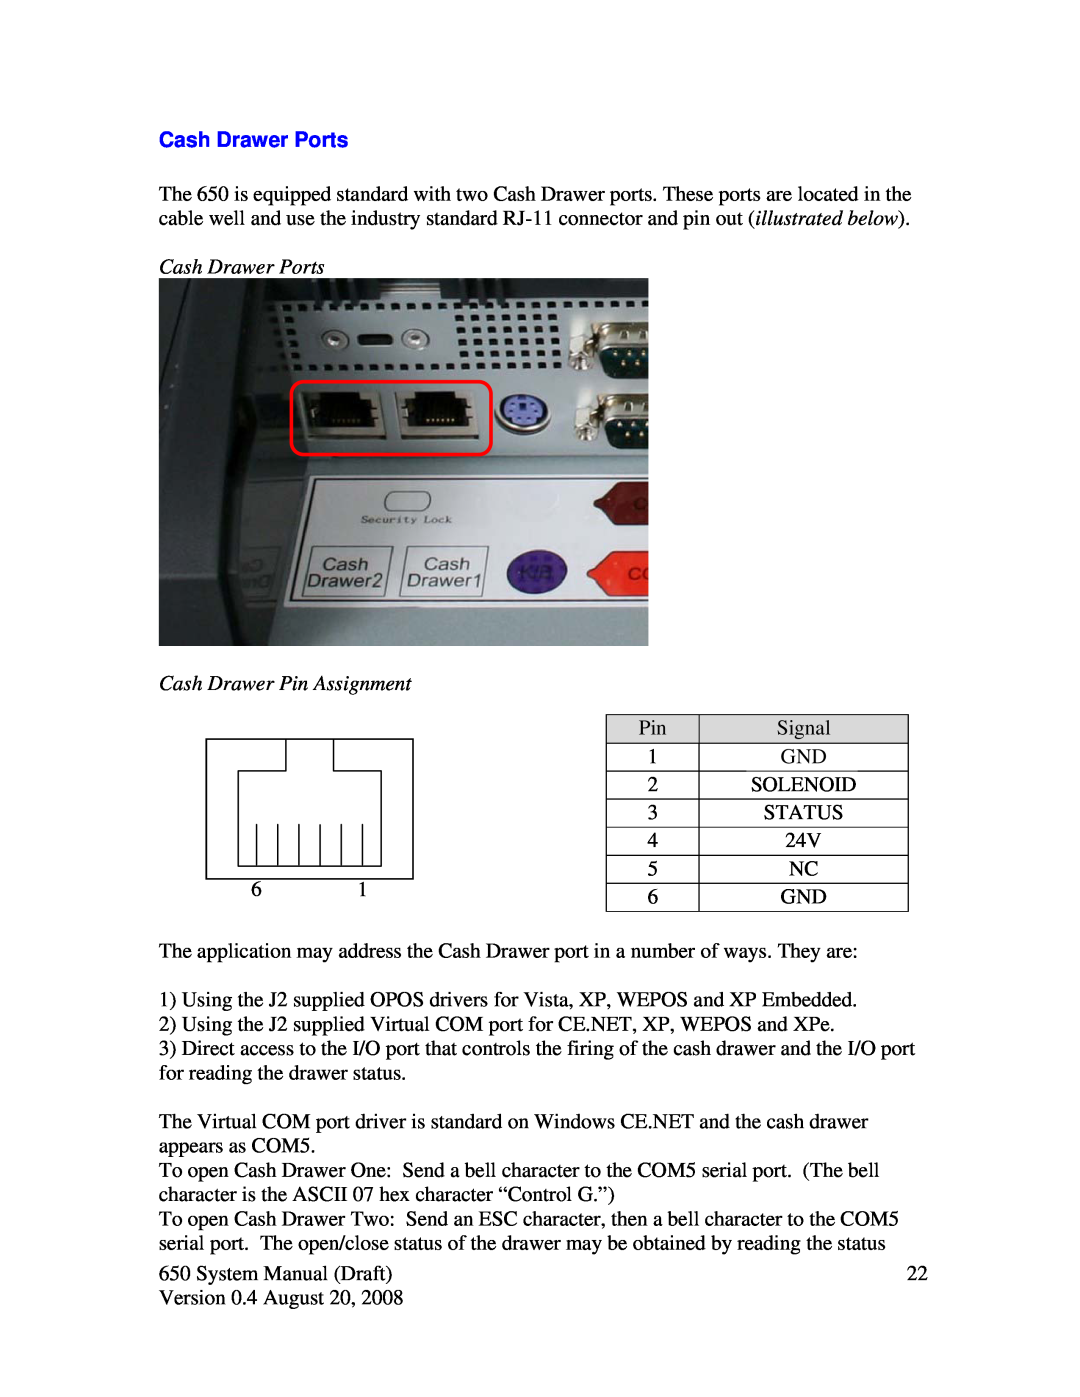 Intel J2 650 system manual Cash Drawer Ports Cash Drawer Pin Assignment 